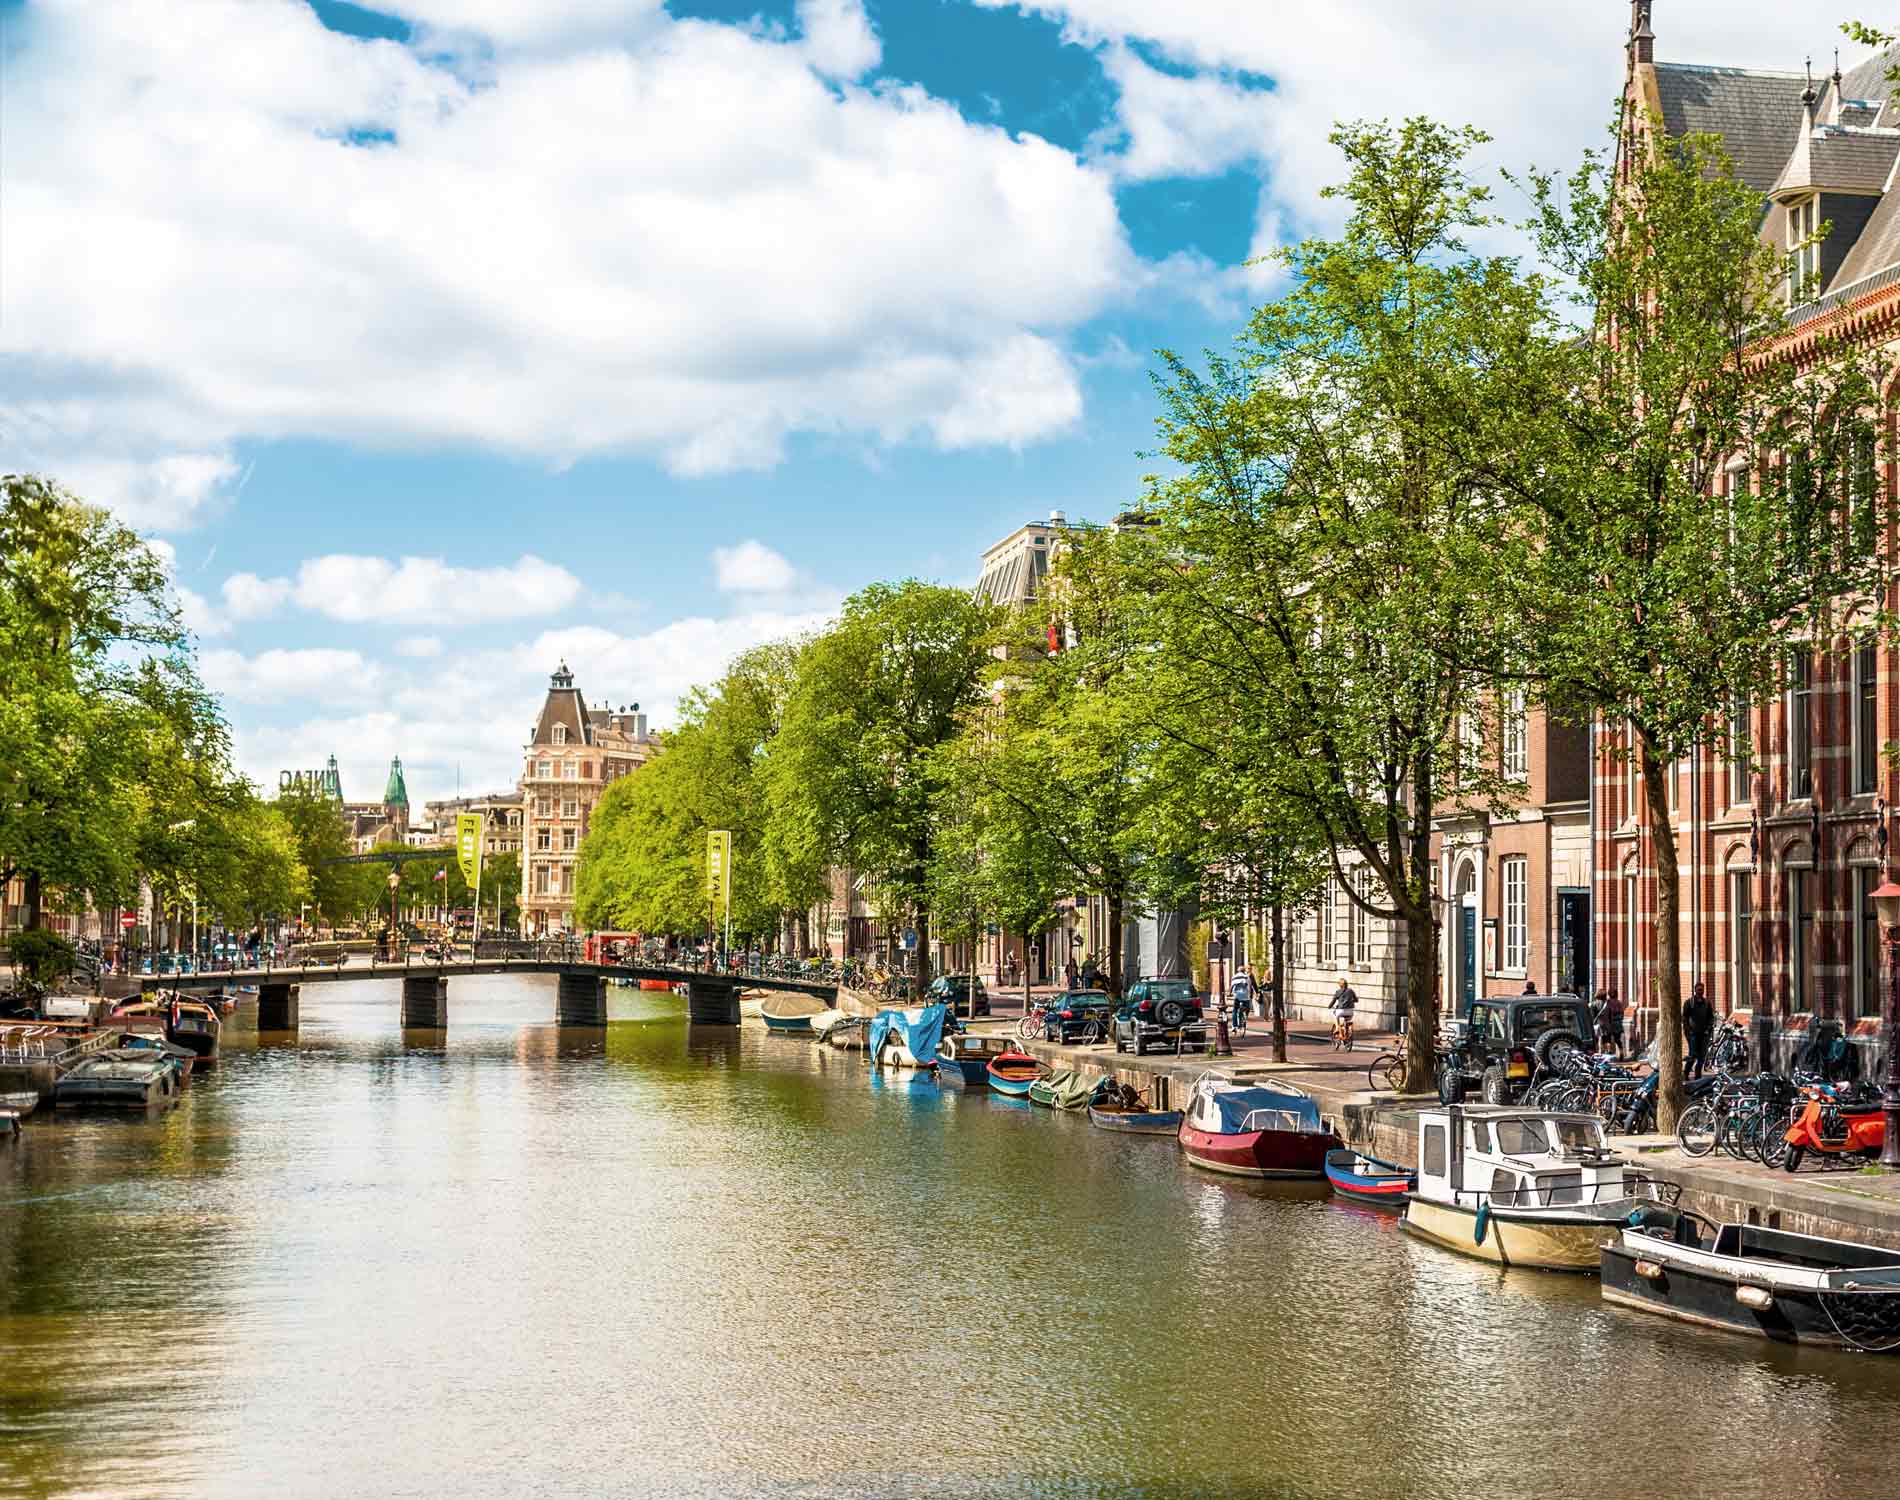 /-/media/images/website/background-images/offices/amsterdam/amsterdam_canal.ashx?sc_lang=de-de